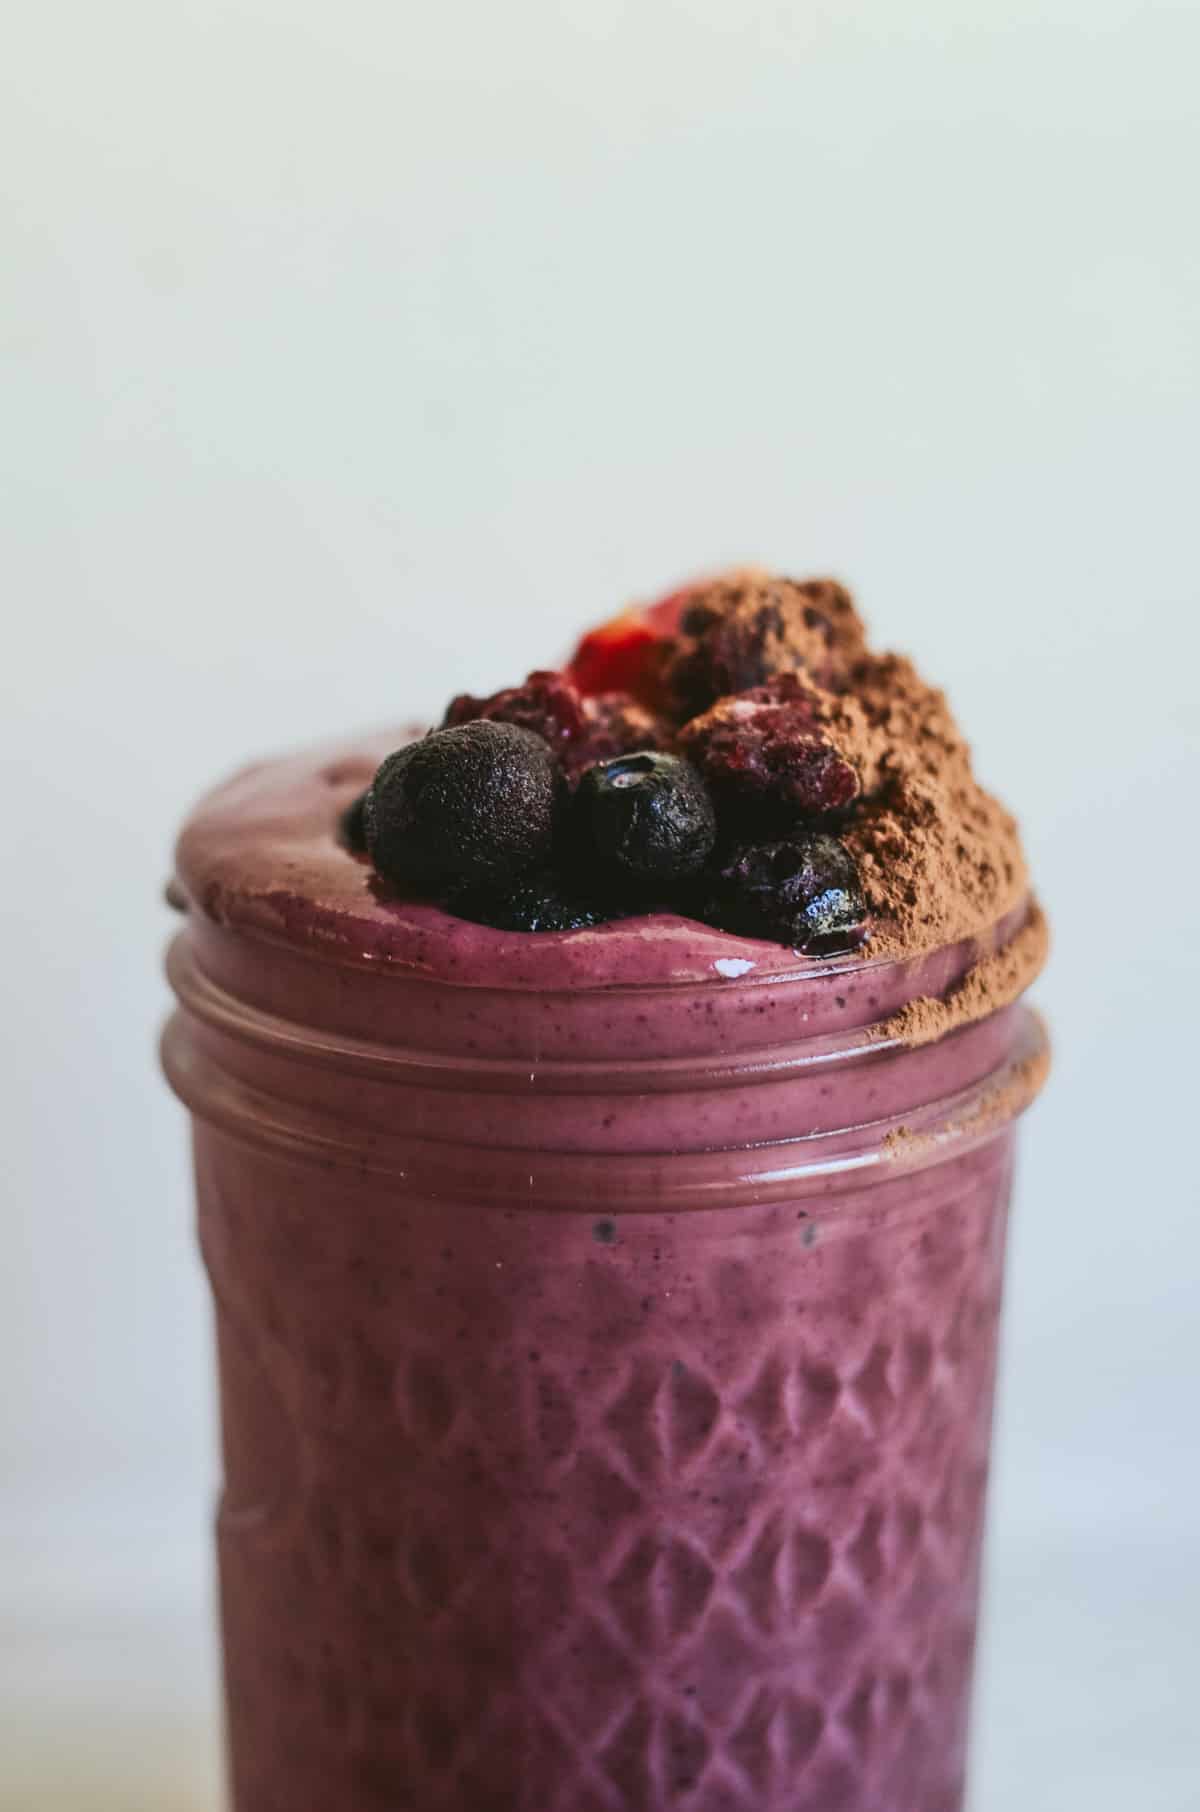 A dark purple smoothie with blueberries, strawberries, blackberries, cocoa powder on top.